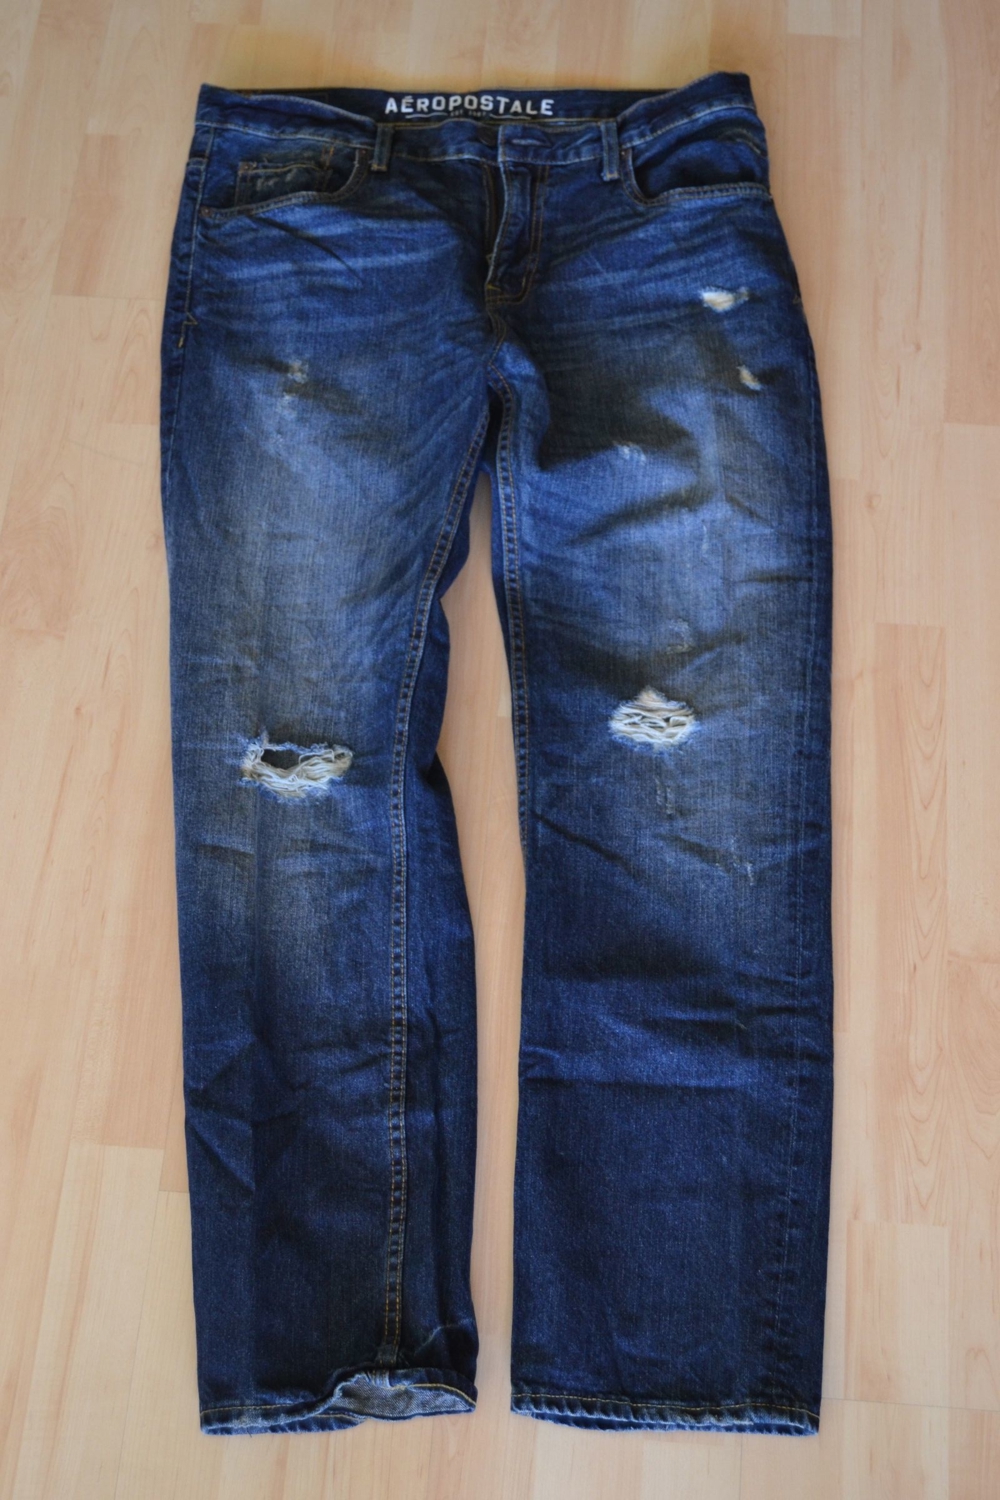 Verkaufe Jeans Aéropostale, Modell Rivington Skinny, Gr. 36x32, Farbe dark-blue mit Löchern